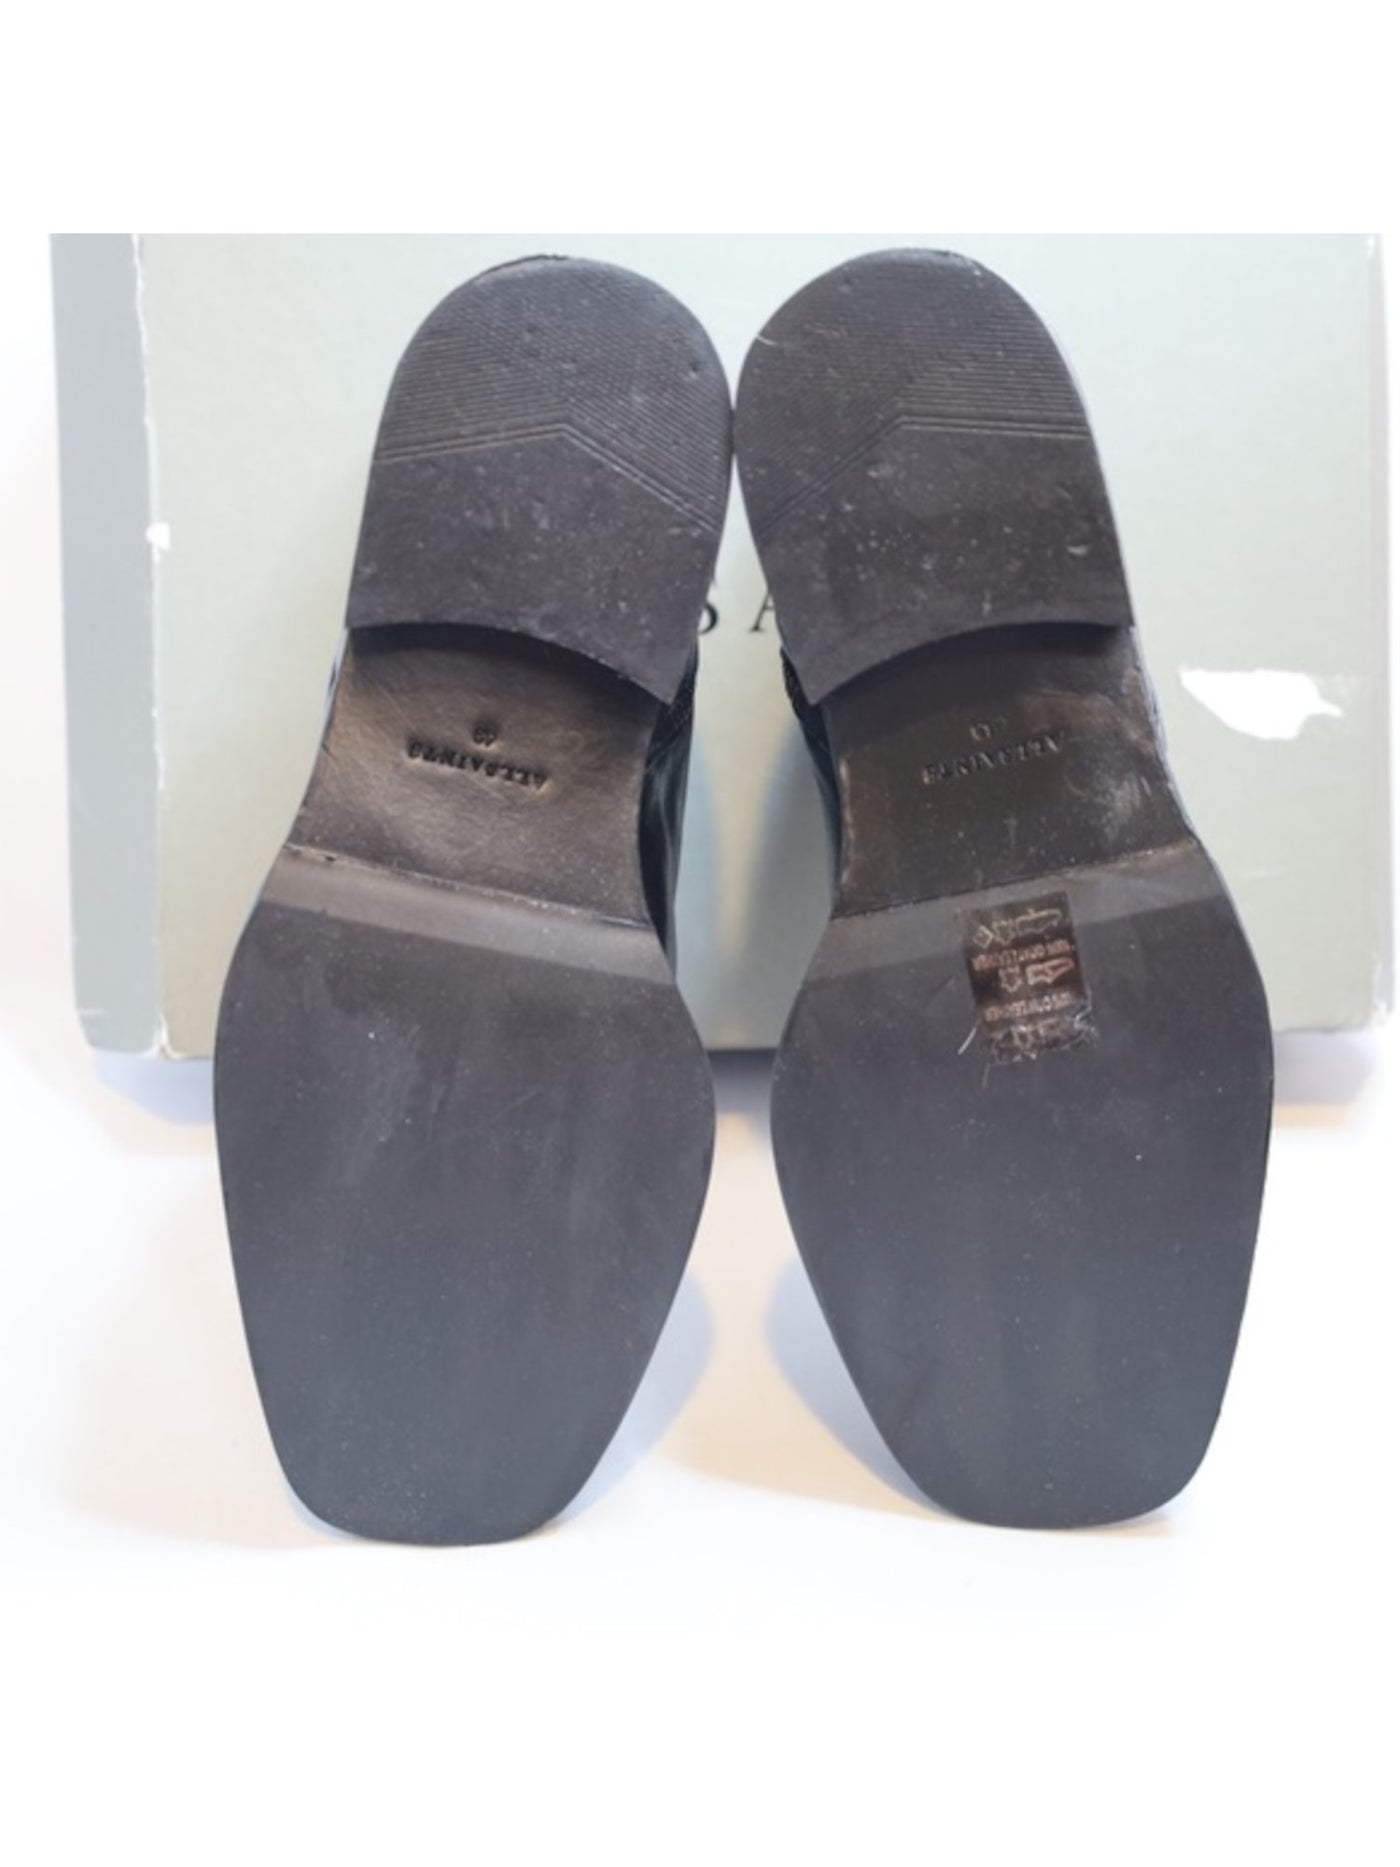 ALLSAINTS Mens Black Comfort Seth Square Toe Block Heel Zip-Up Leather Boots Shoes